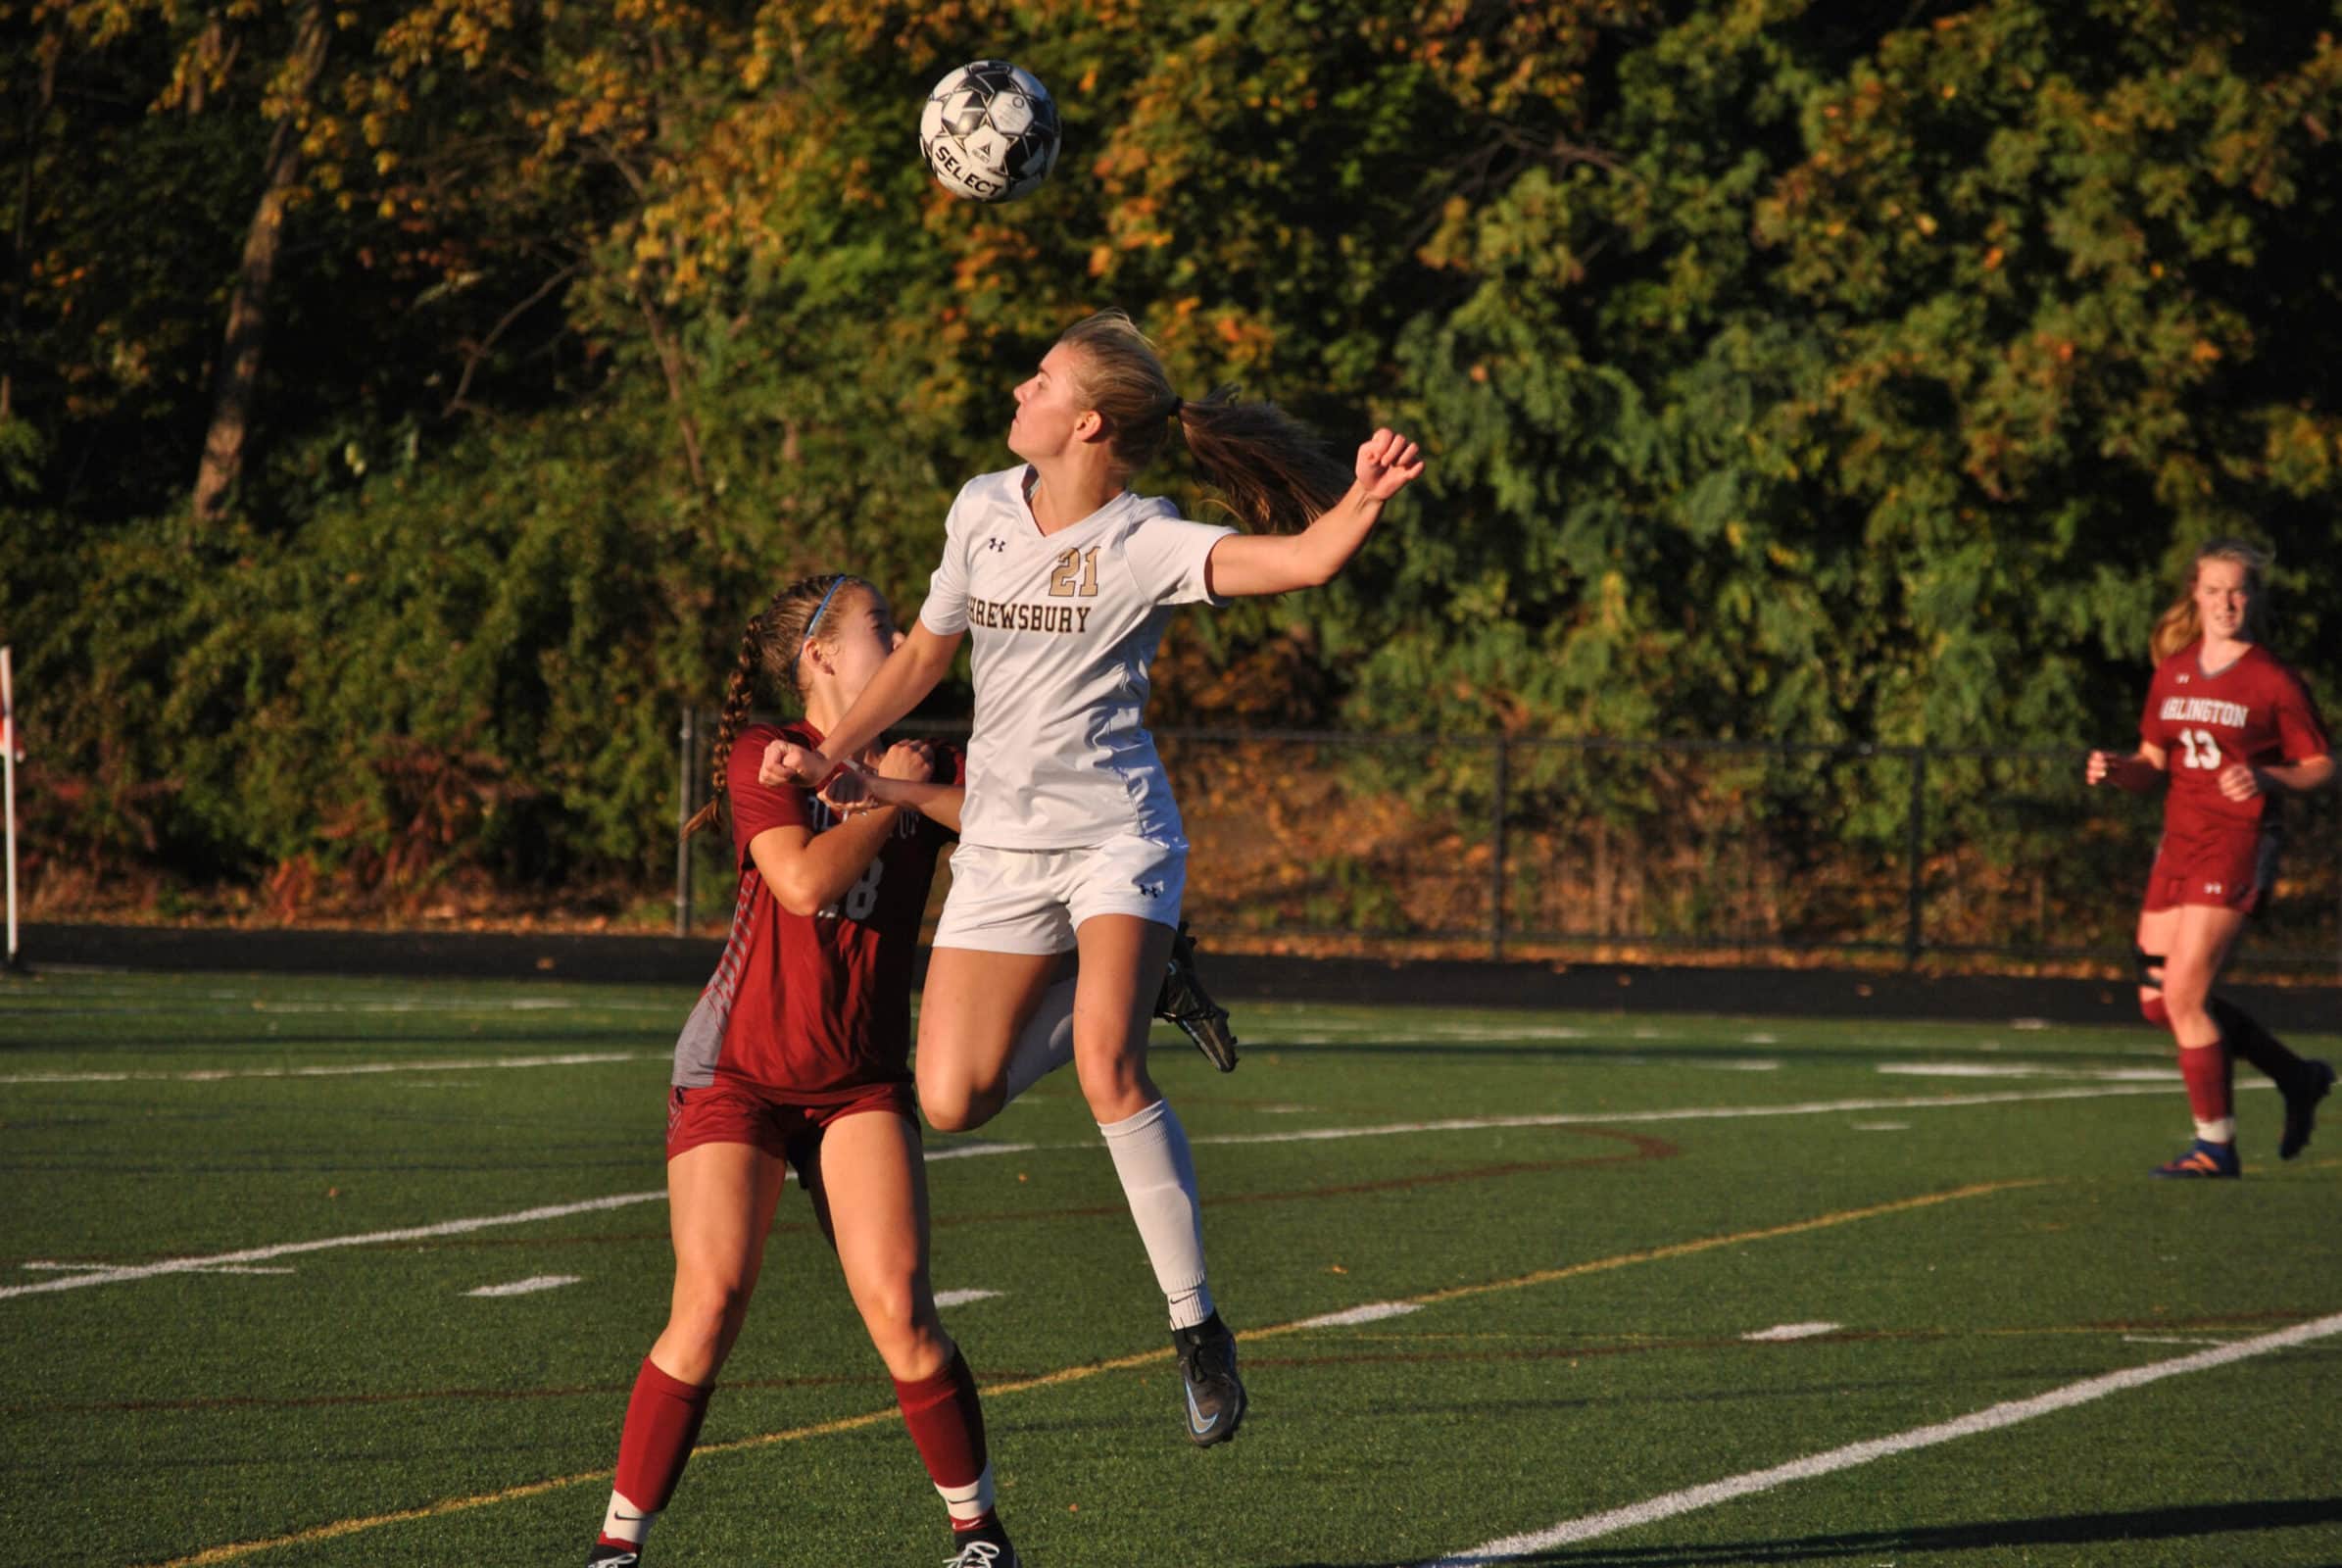 Shrewsbury’s Amanda Kalinowski jumps to head the ball away from an opponent. (Photo/Dakota Antelman)